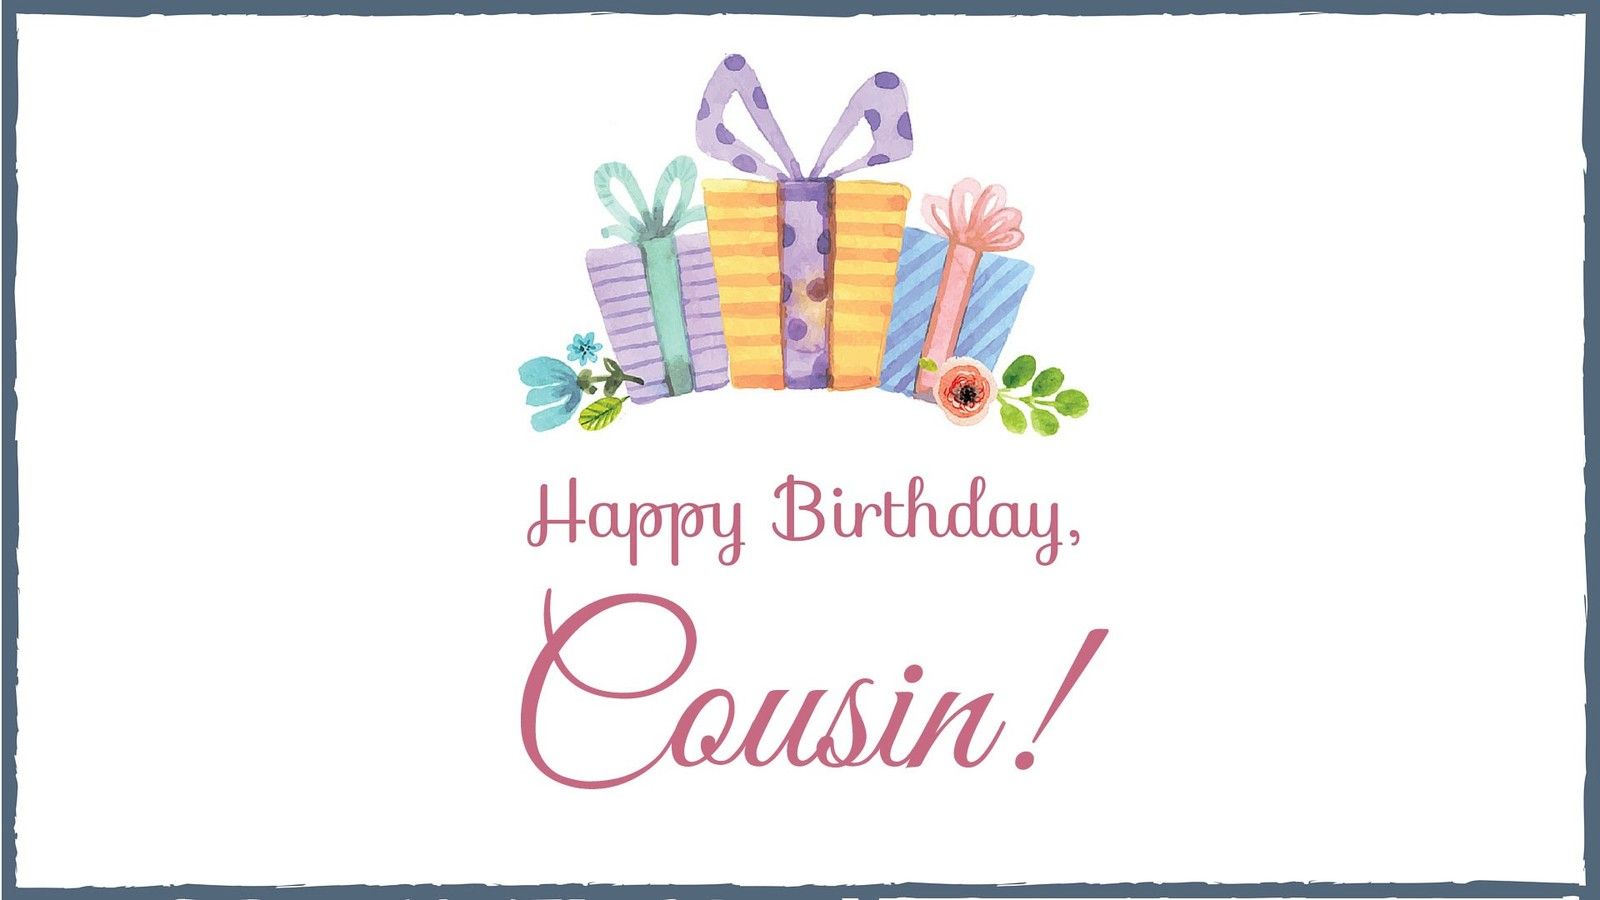 Happy birthday image For Cousin